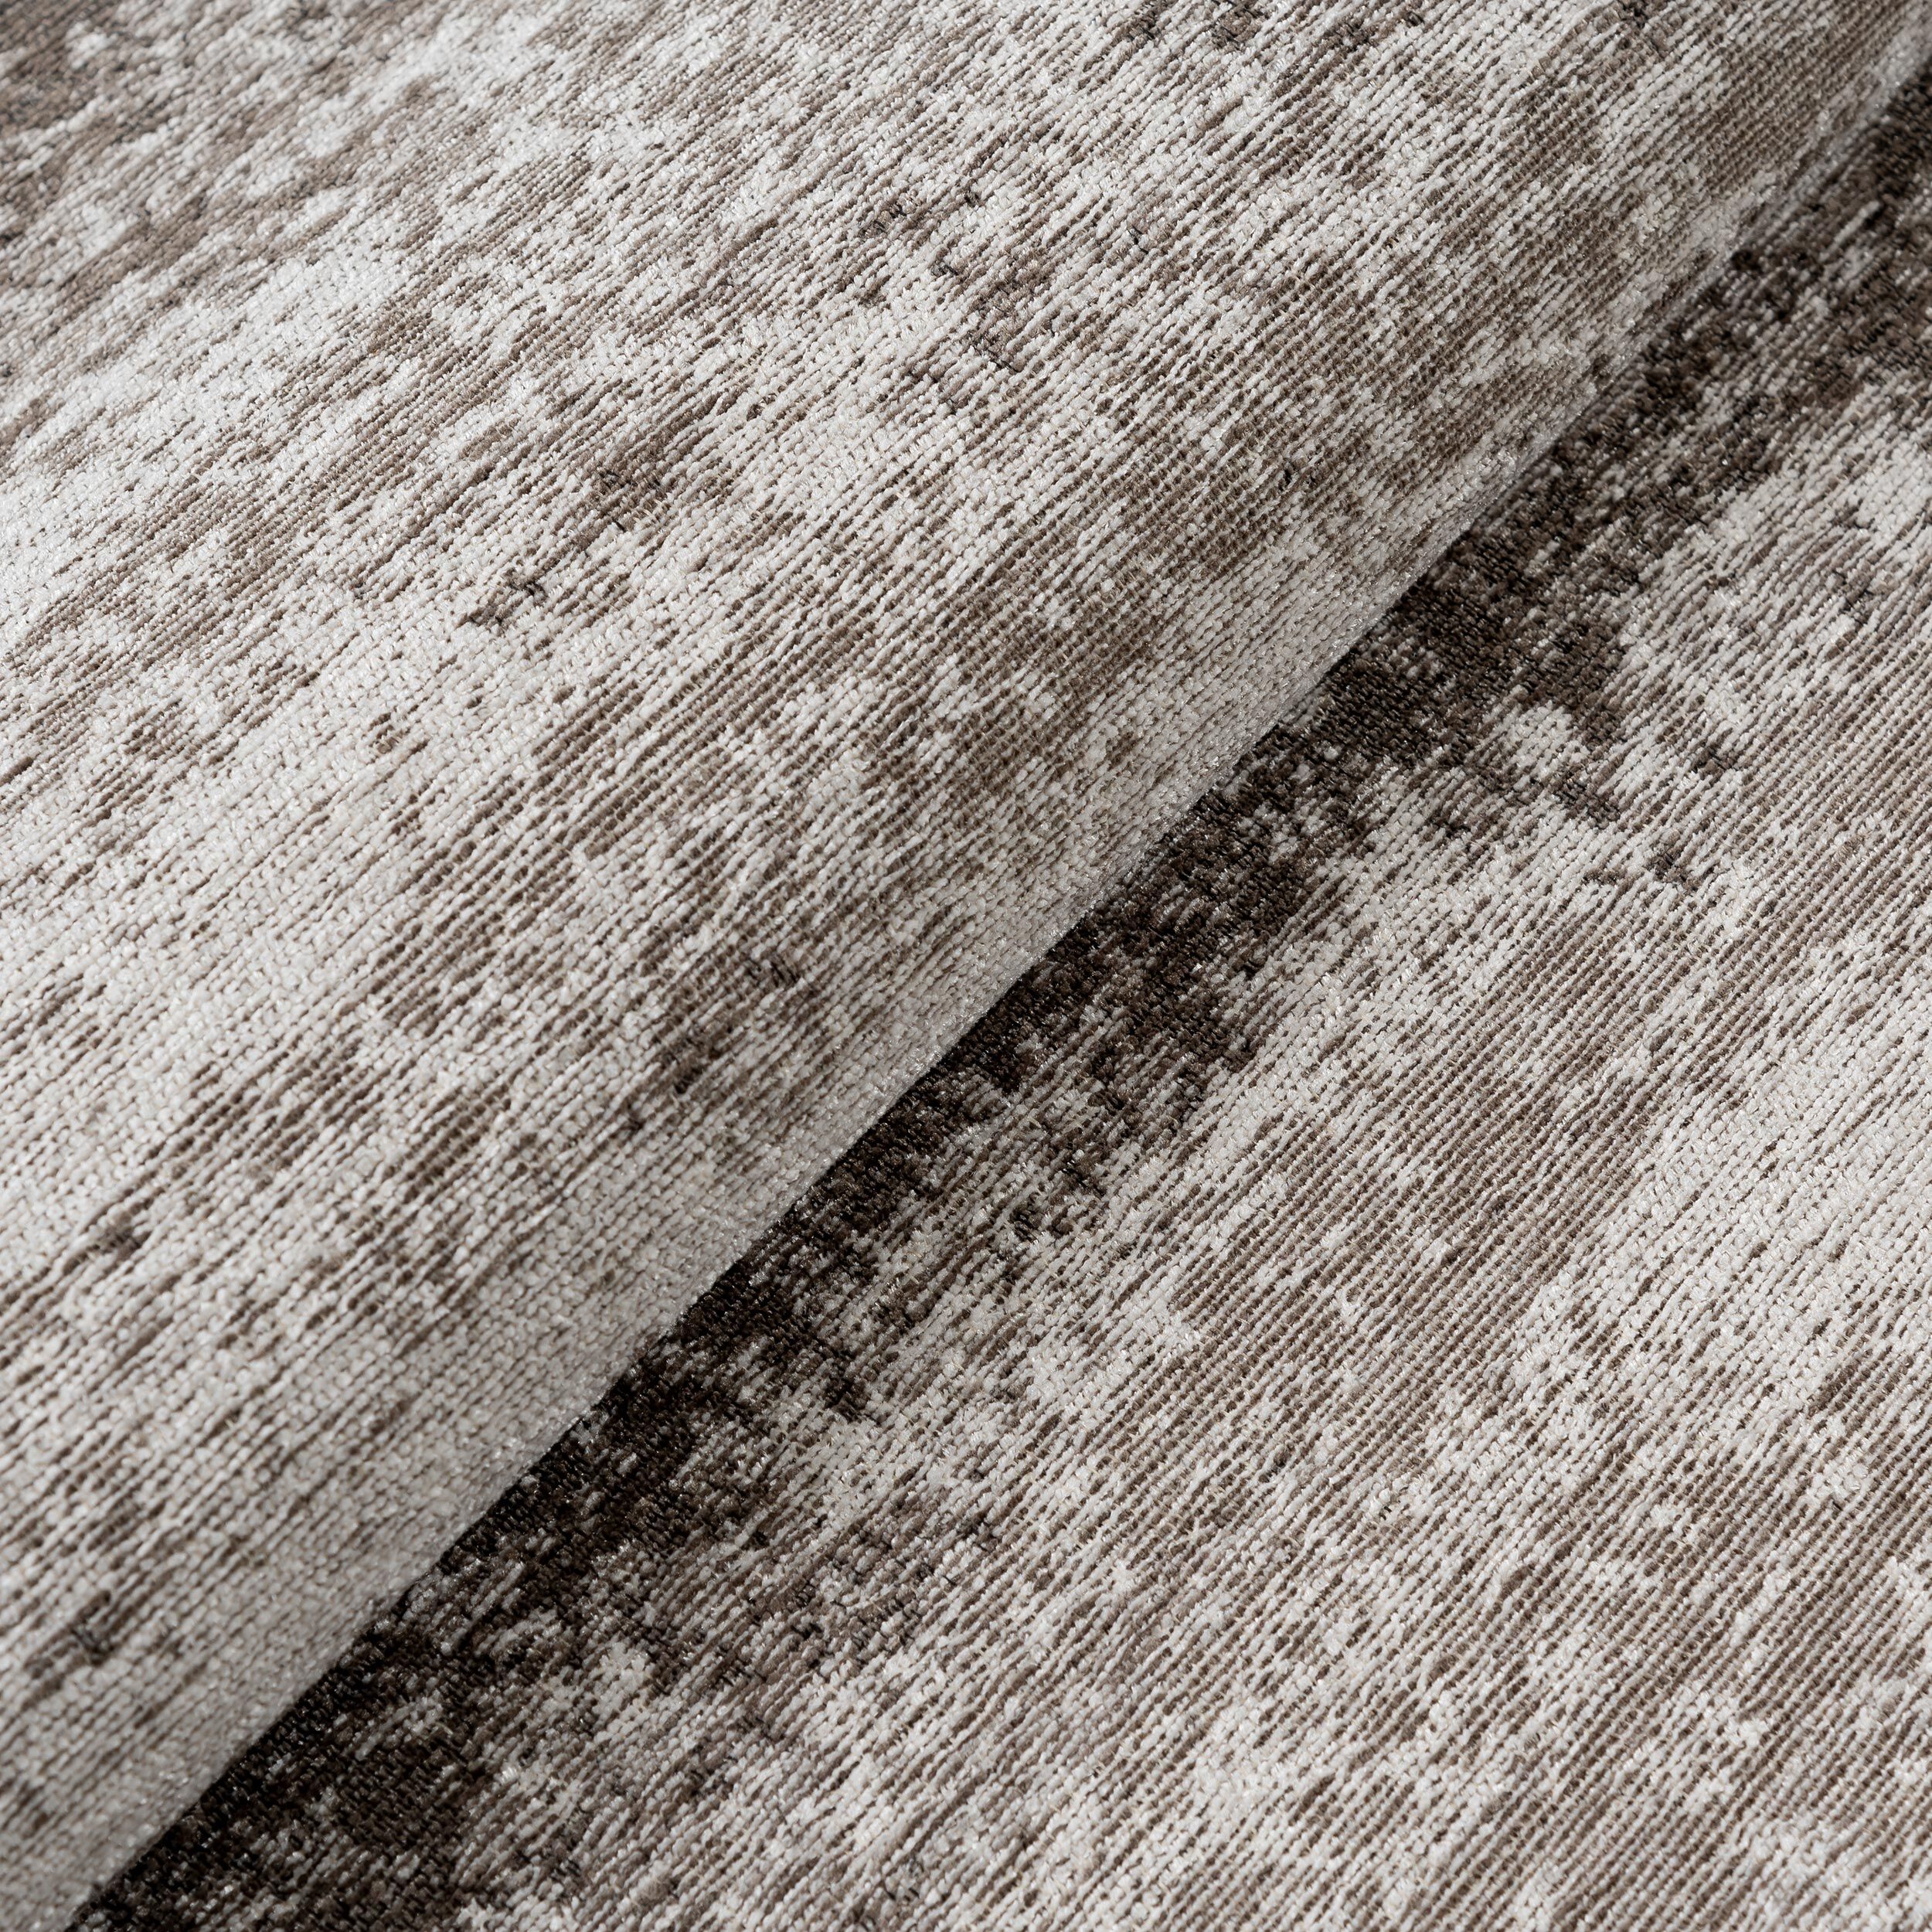 Waschbarer Teppich Carin Braun